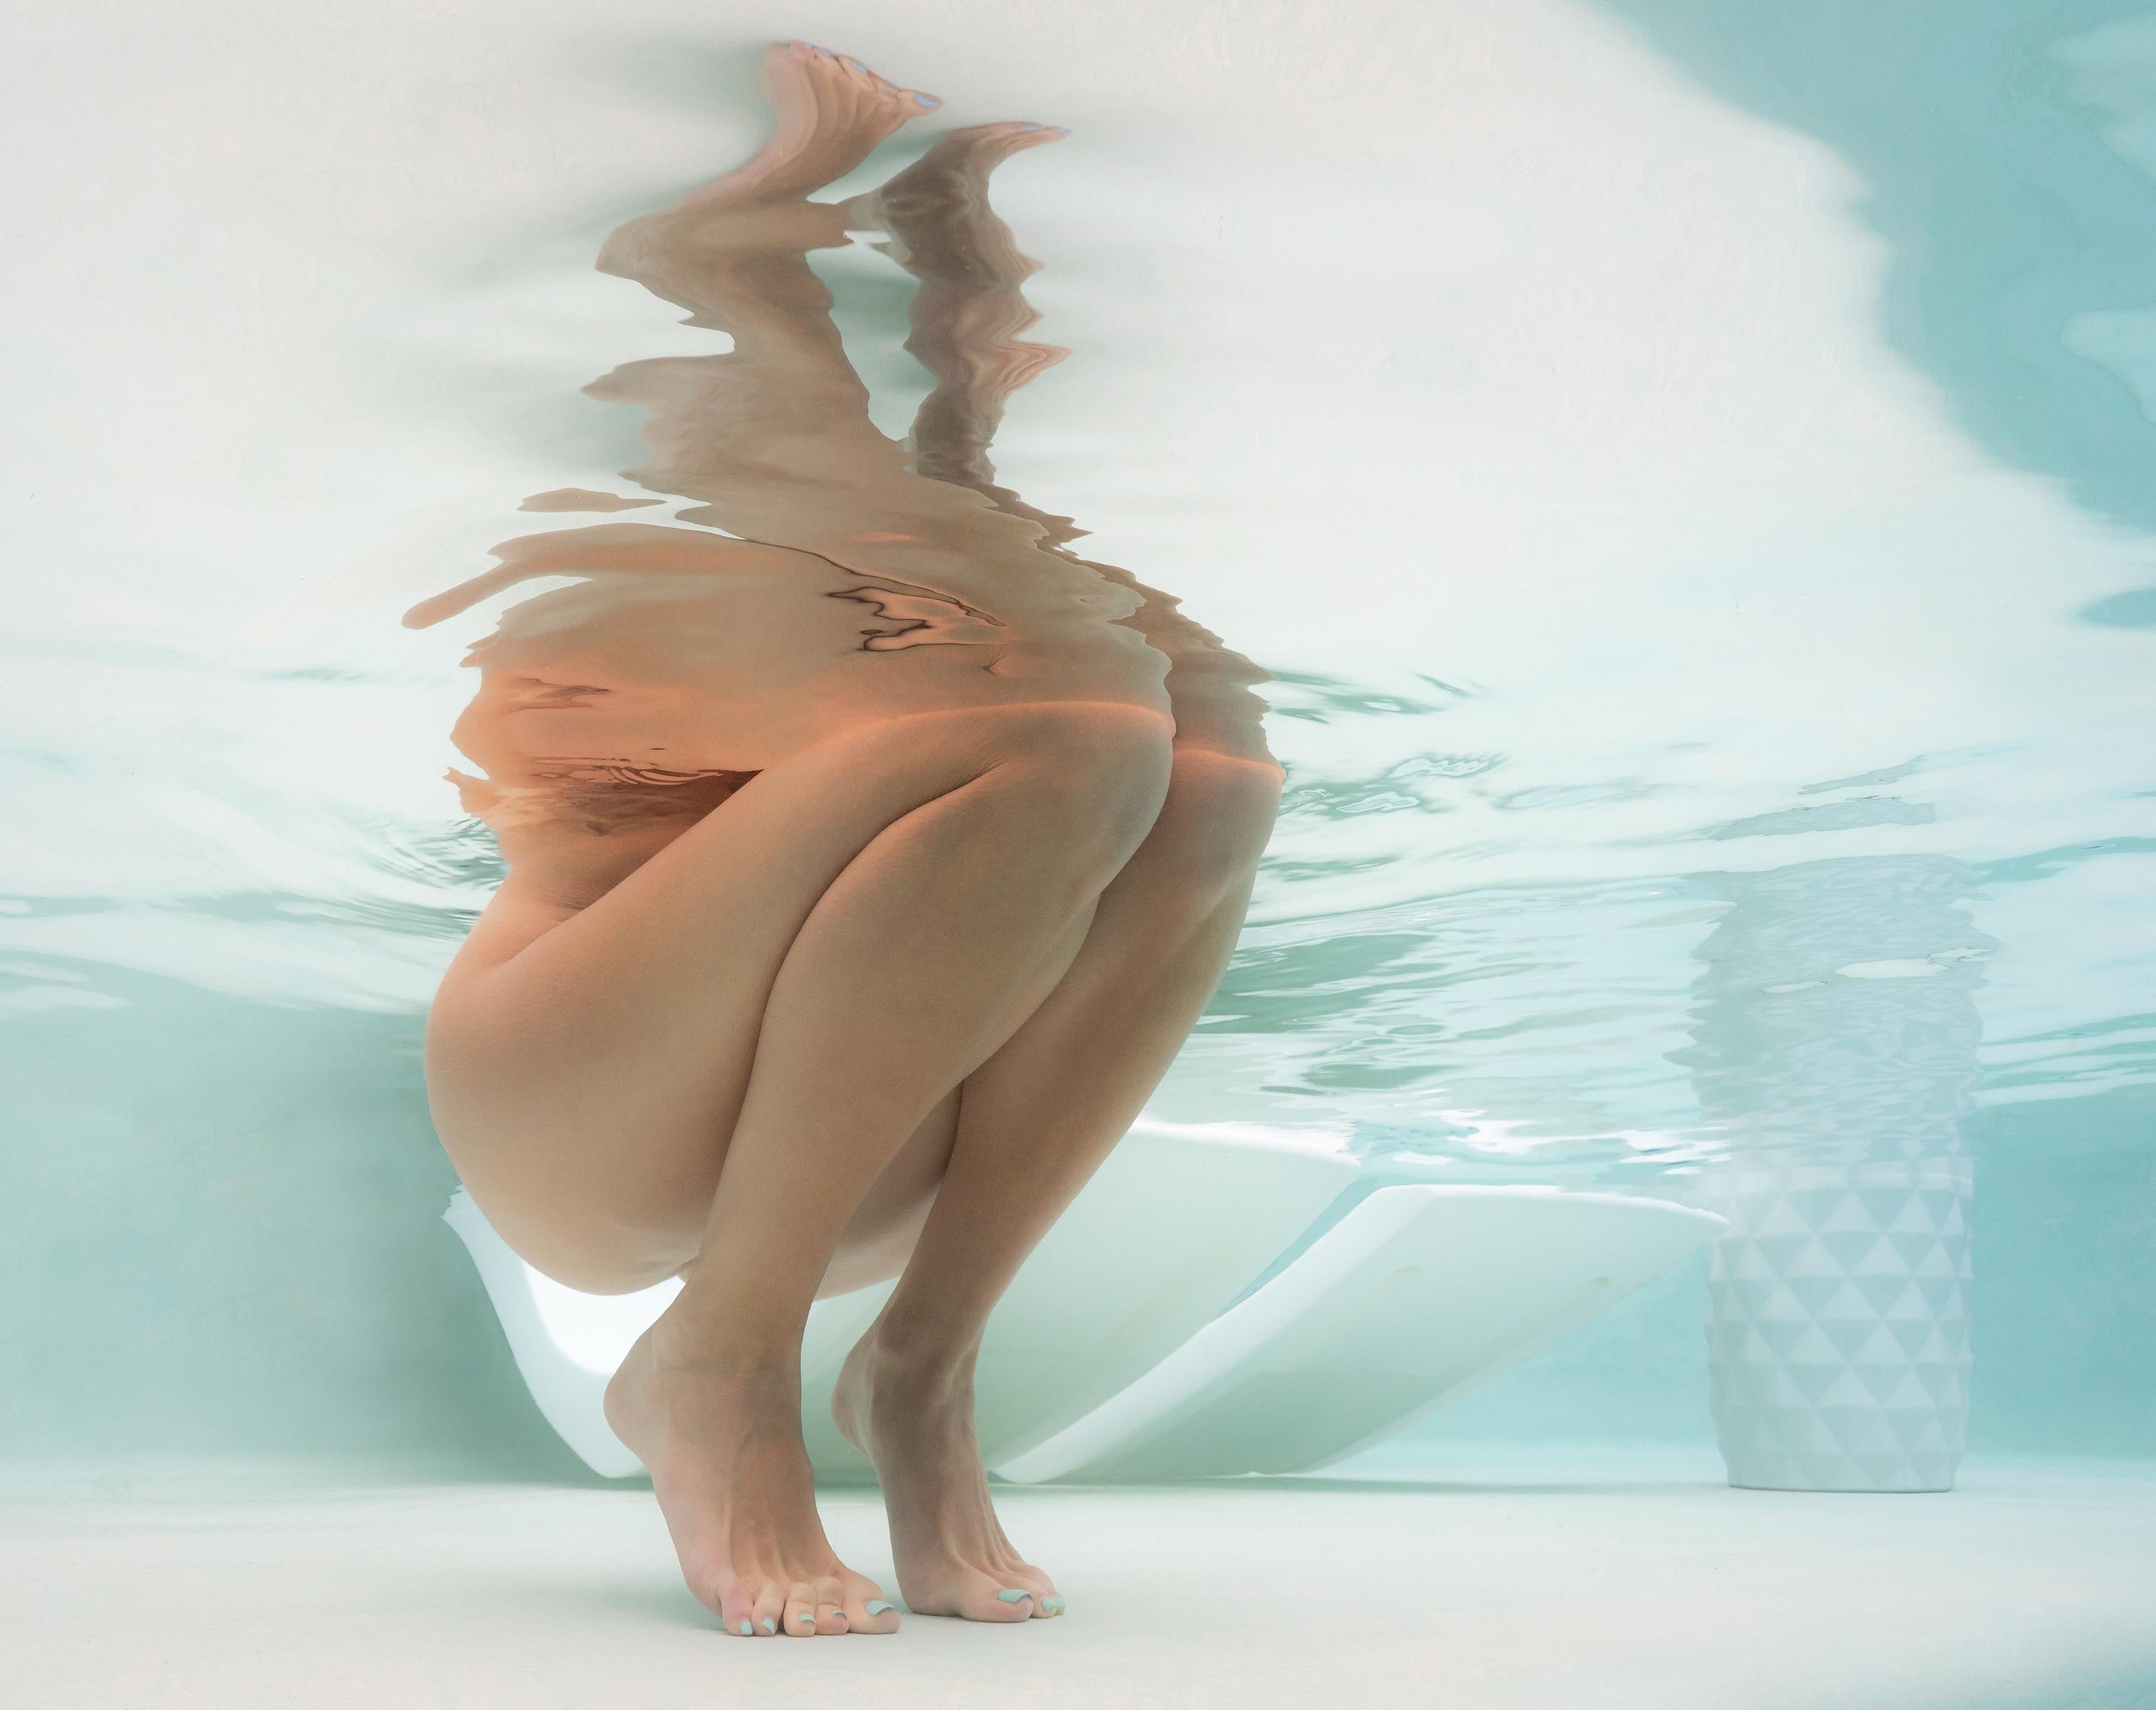 Pristine - underwater nude photograph - archival pigment print 43